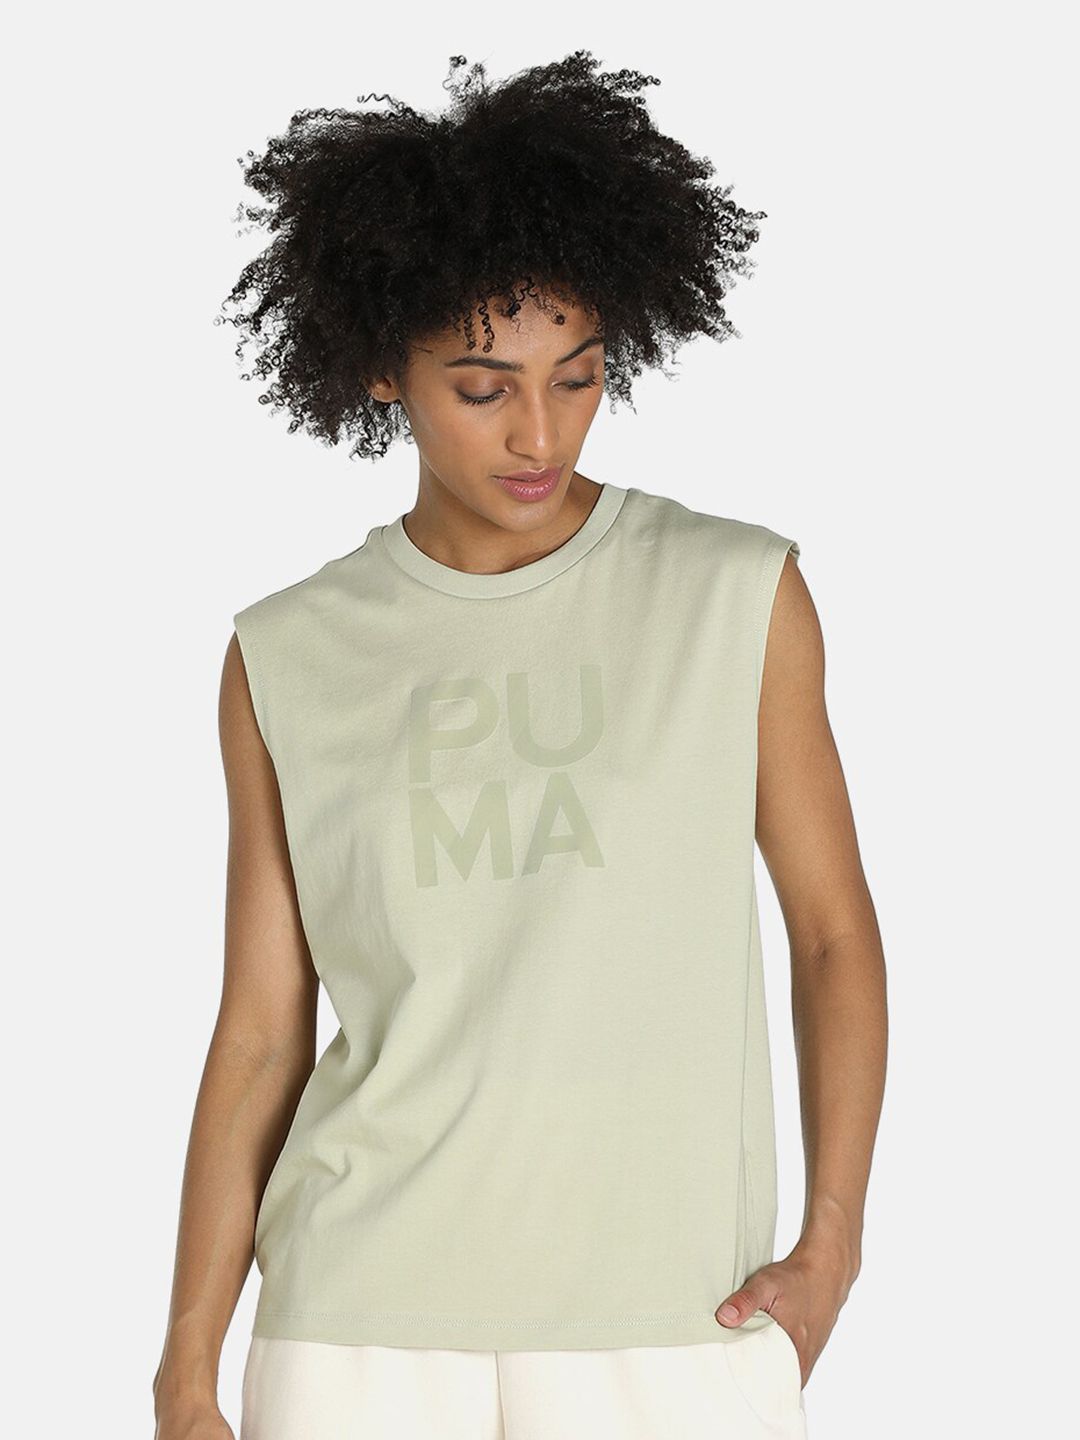 Puma Women Green Brand Logo Printed Training or Gym Cotton T-shirt Price in India